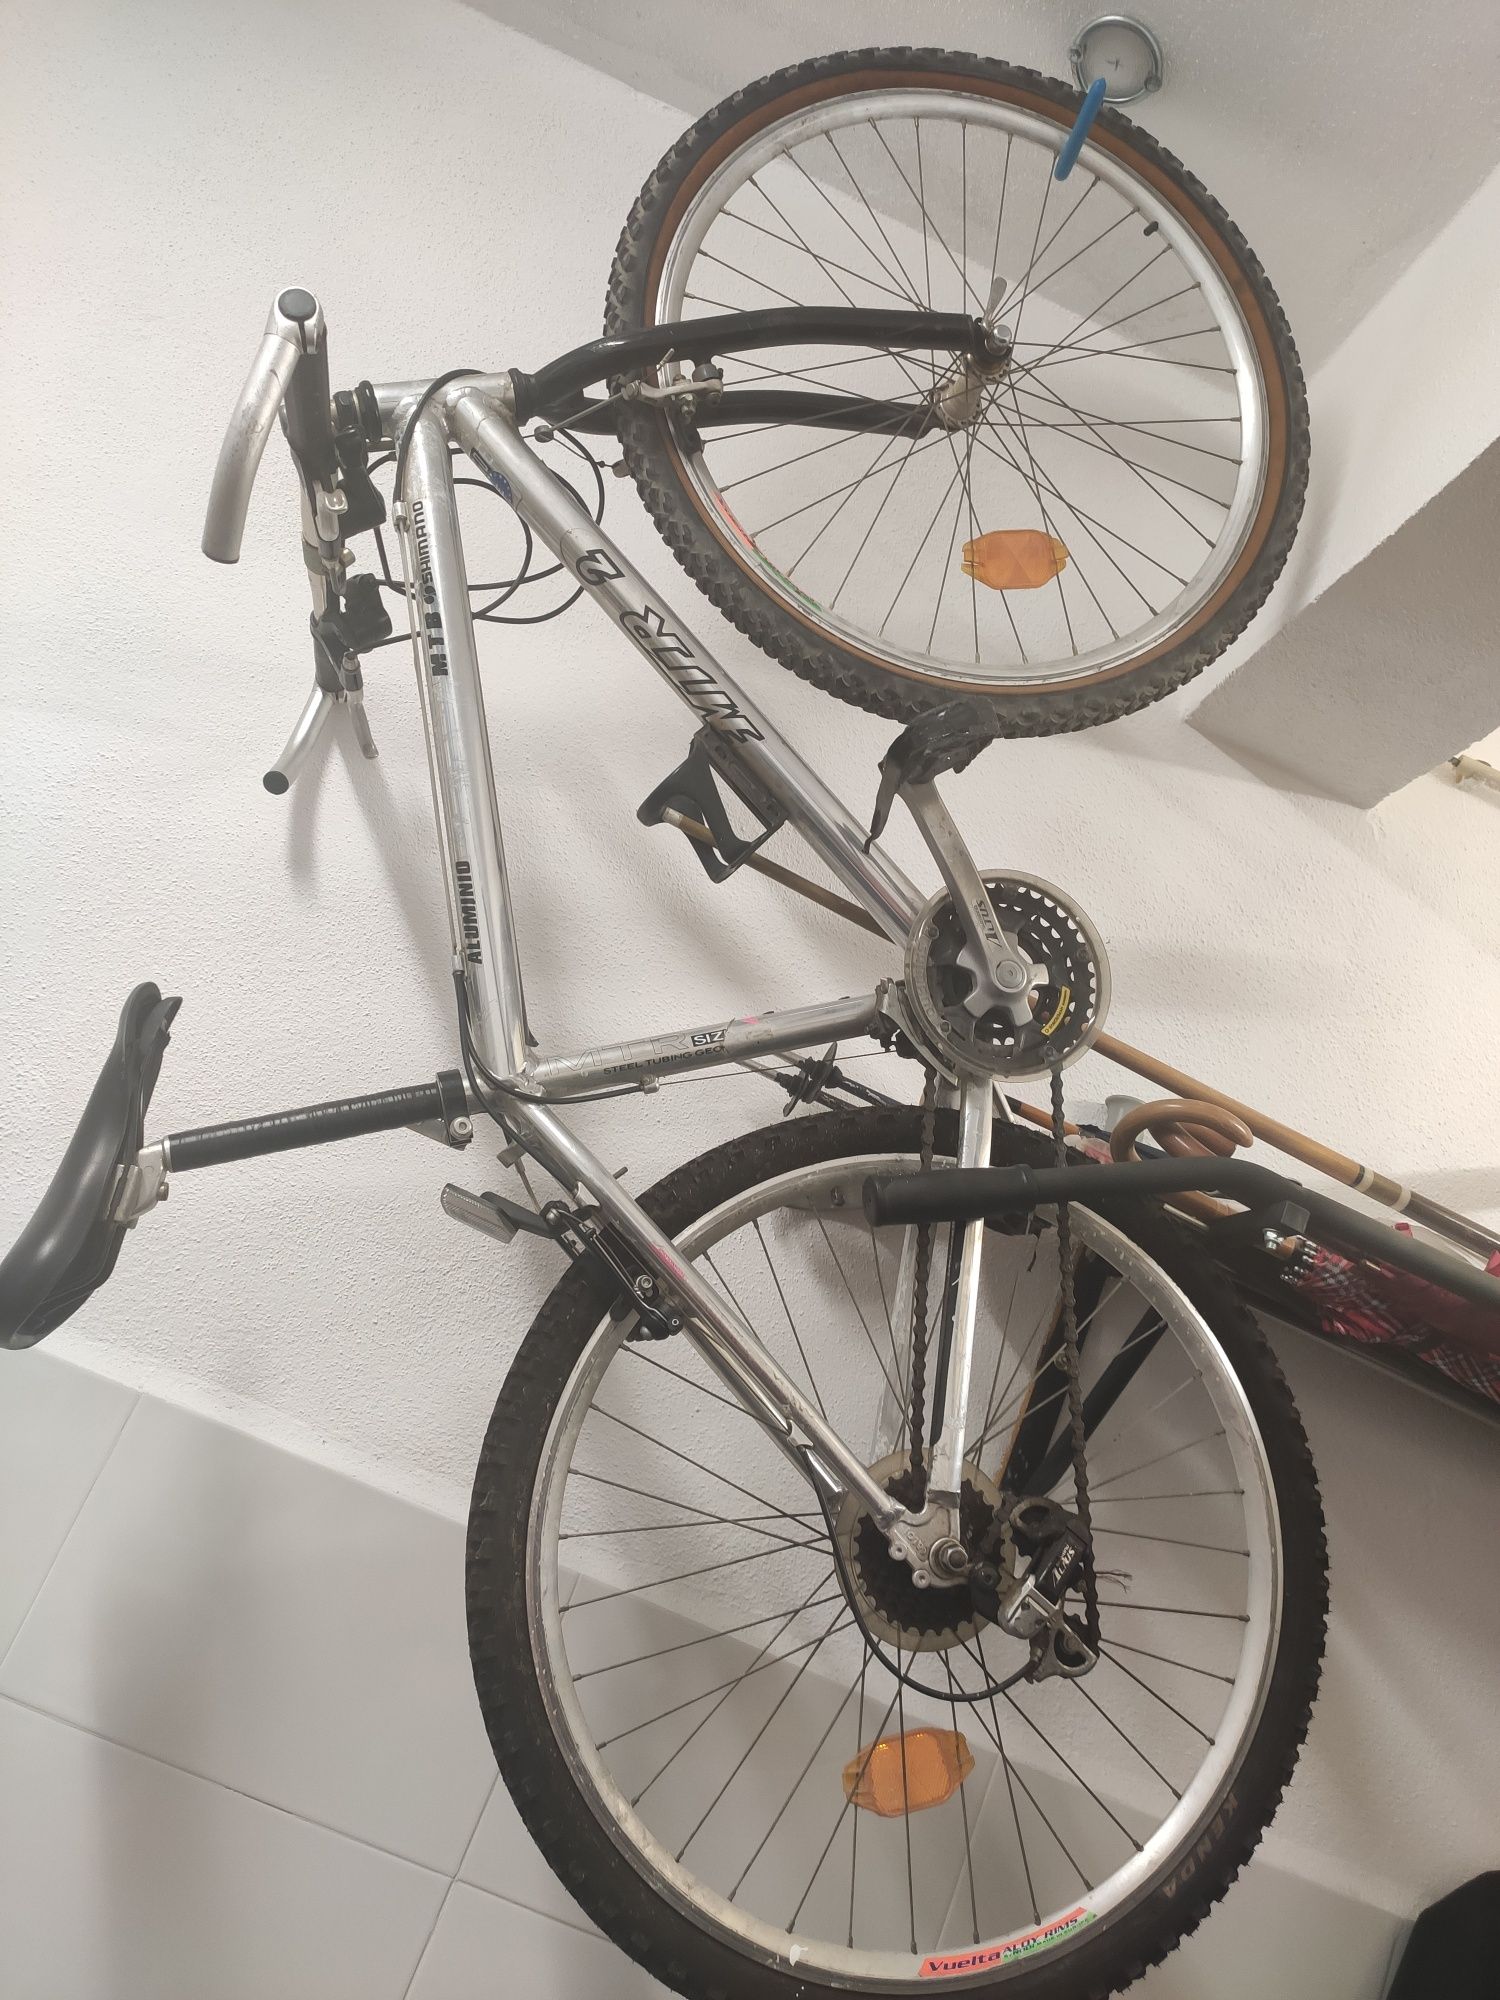 Bicicleta MTR 2 - POUCO USO